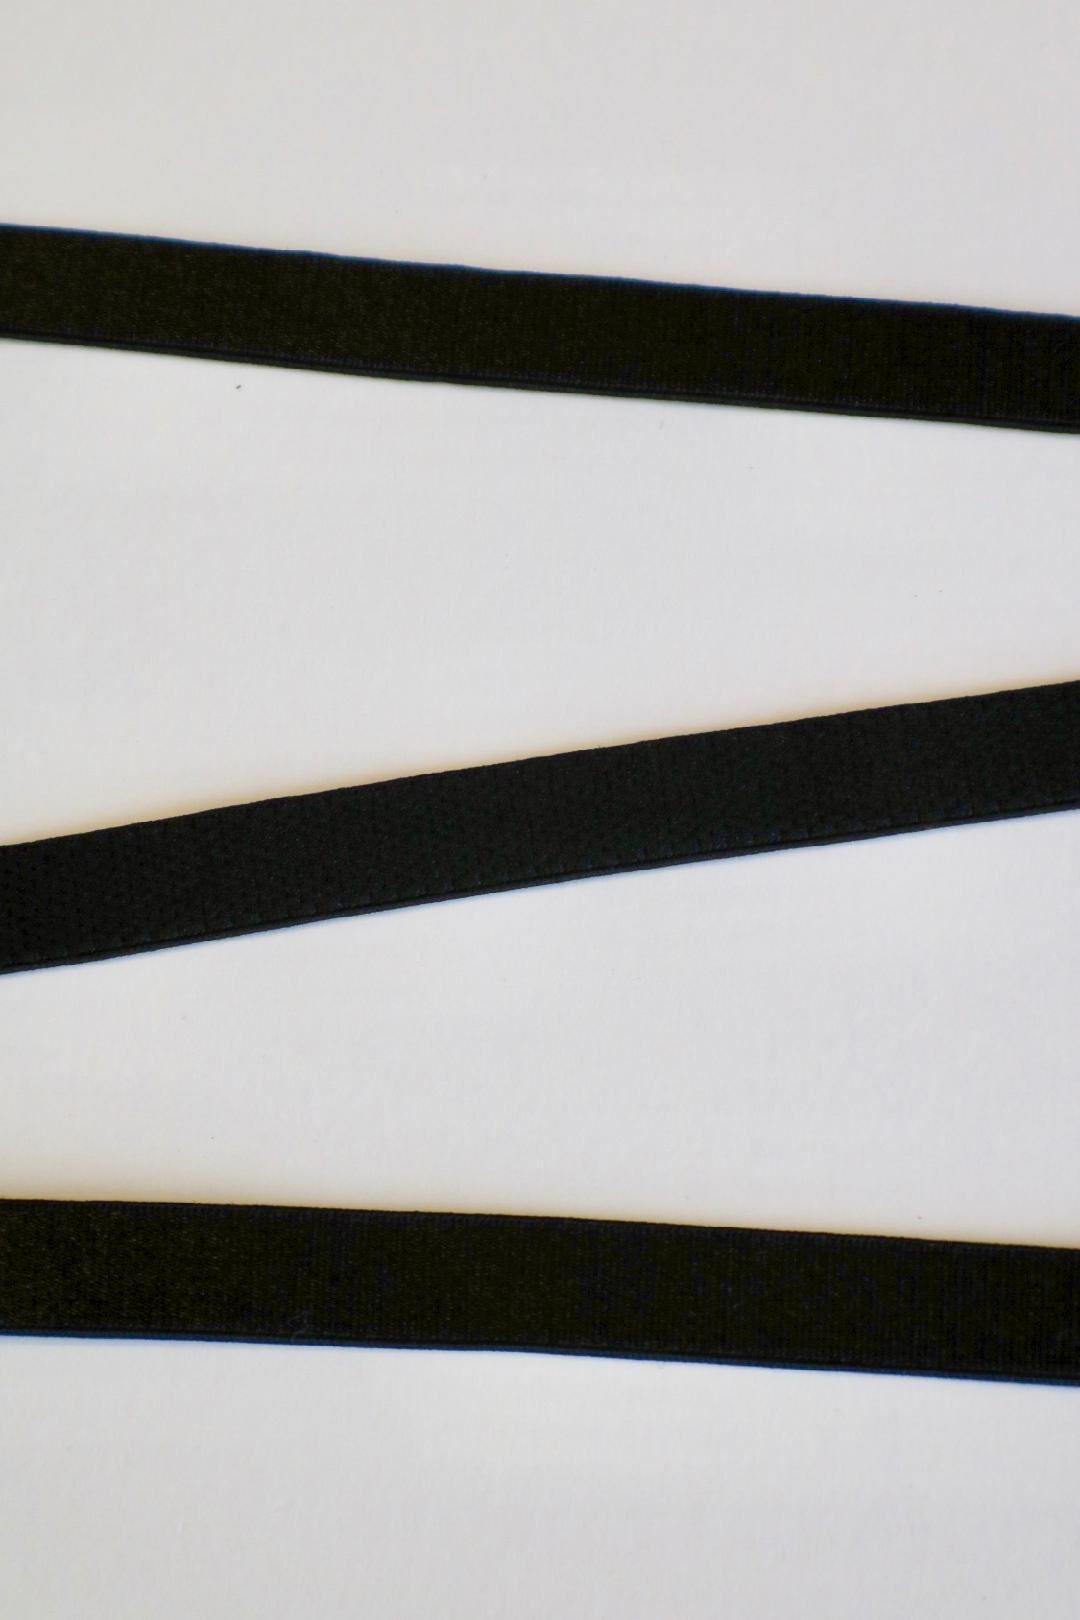 Bra Strap 3/8 10mm for Sewing Lingerie, Elastic Band, Elastic Trim